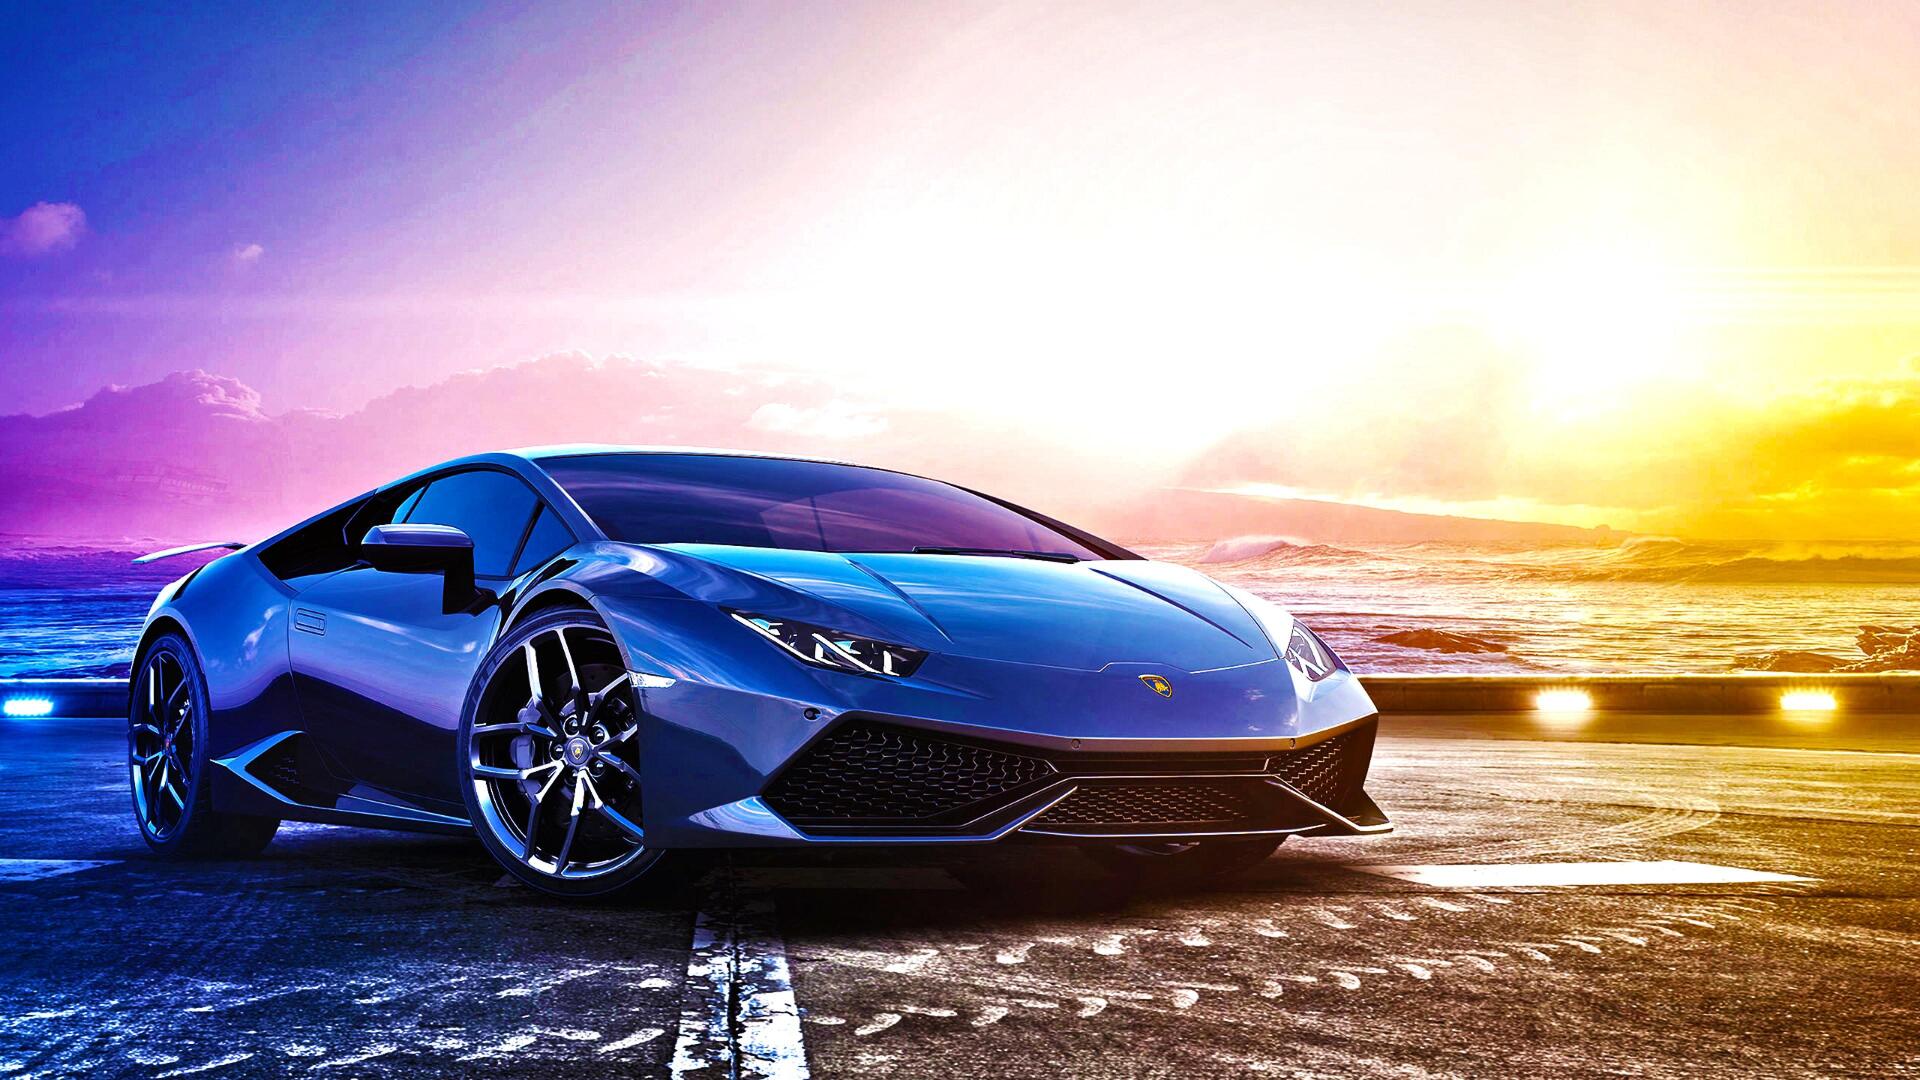 10+ Lamborghini Car Wallpaper Hd 1080P Free Download Background